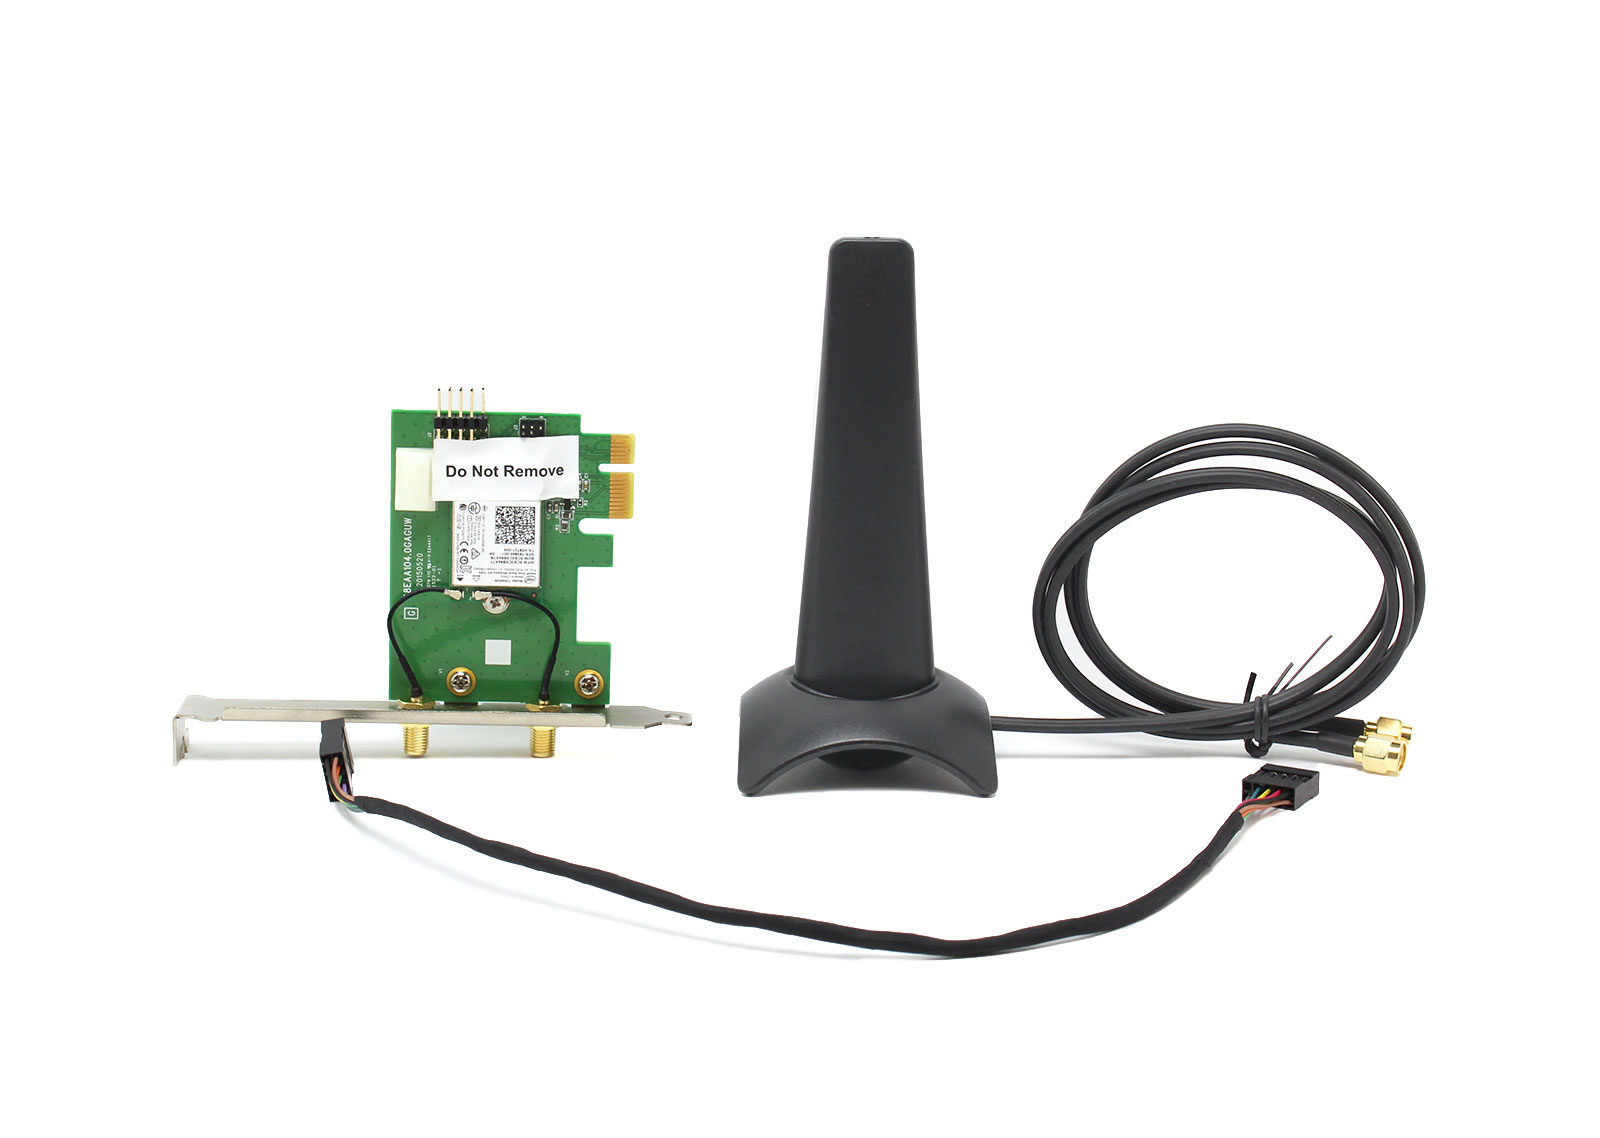 broadcom 802.11 wireless lan adapter